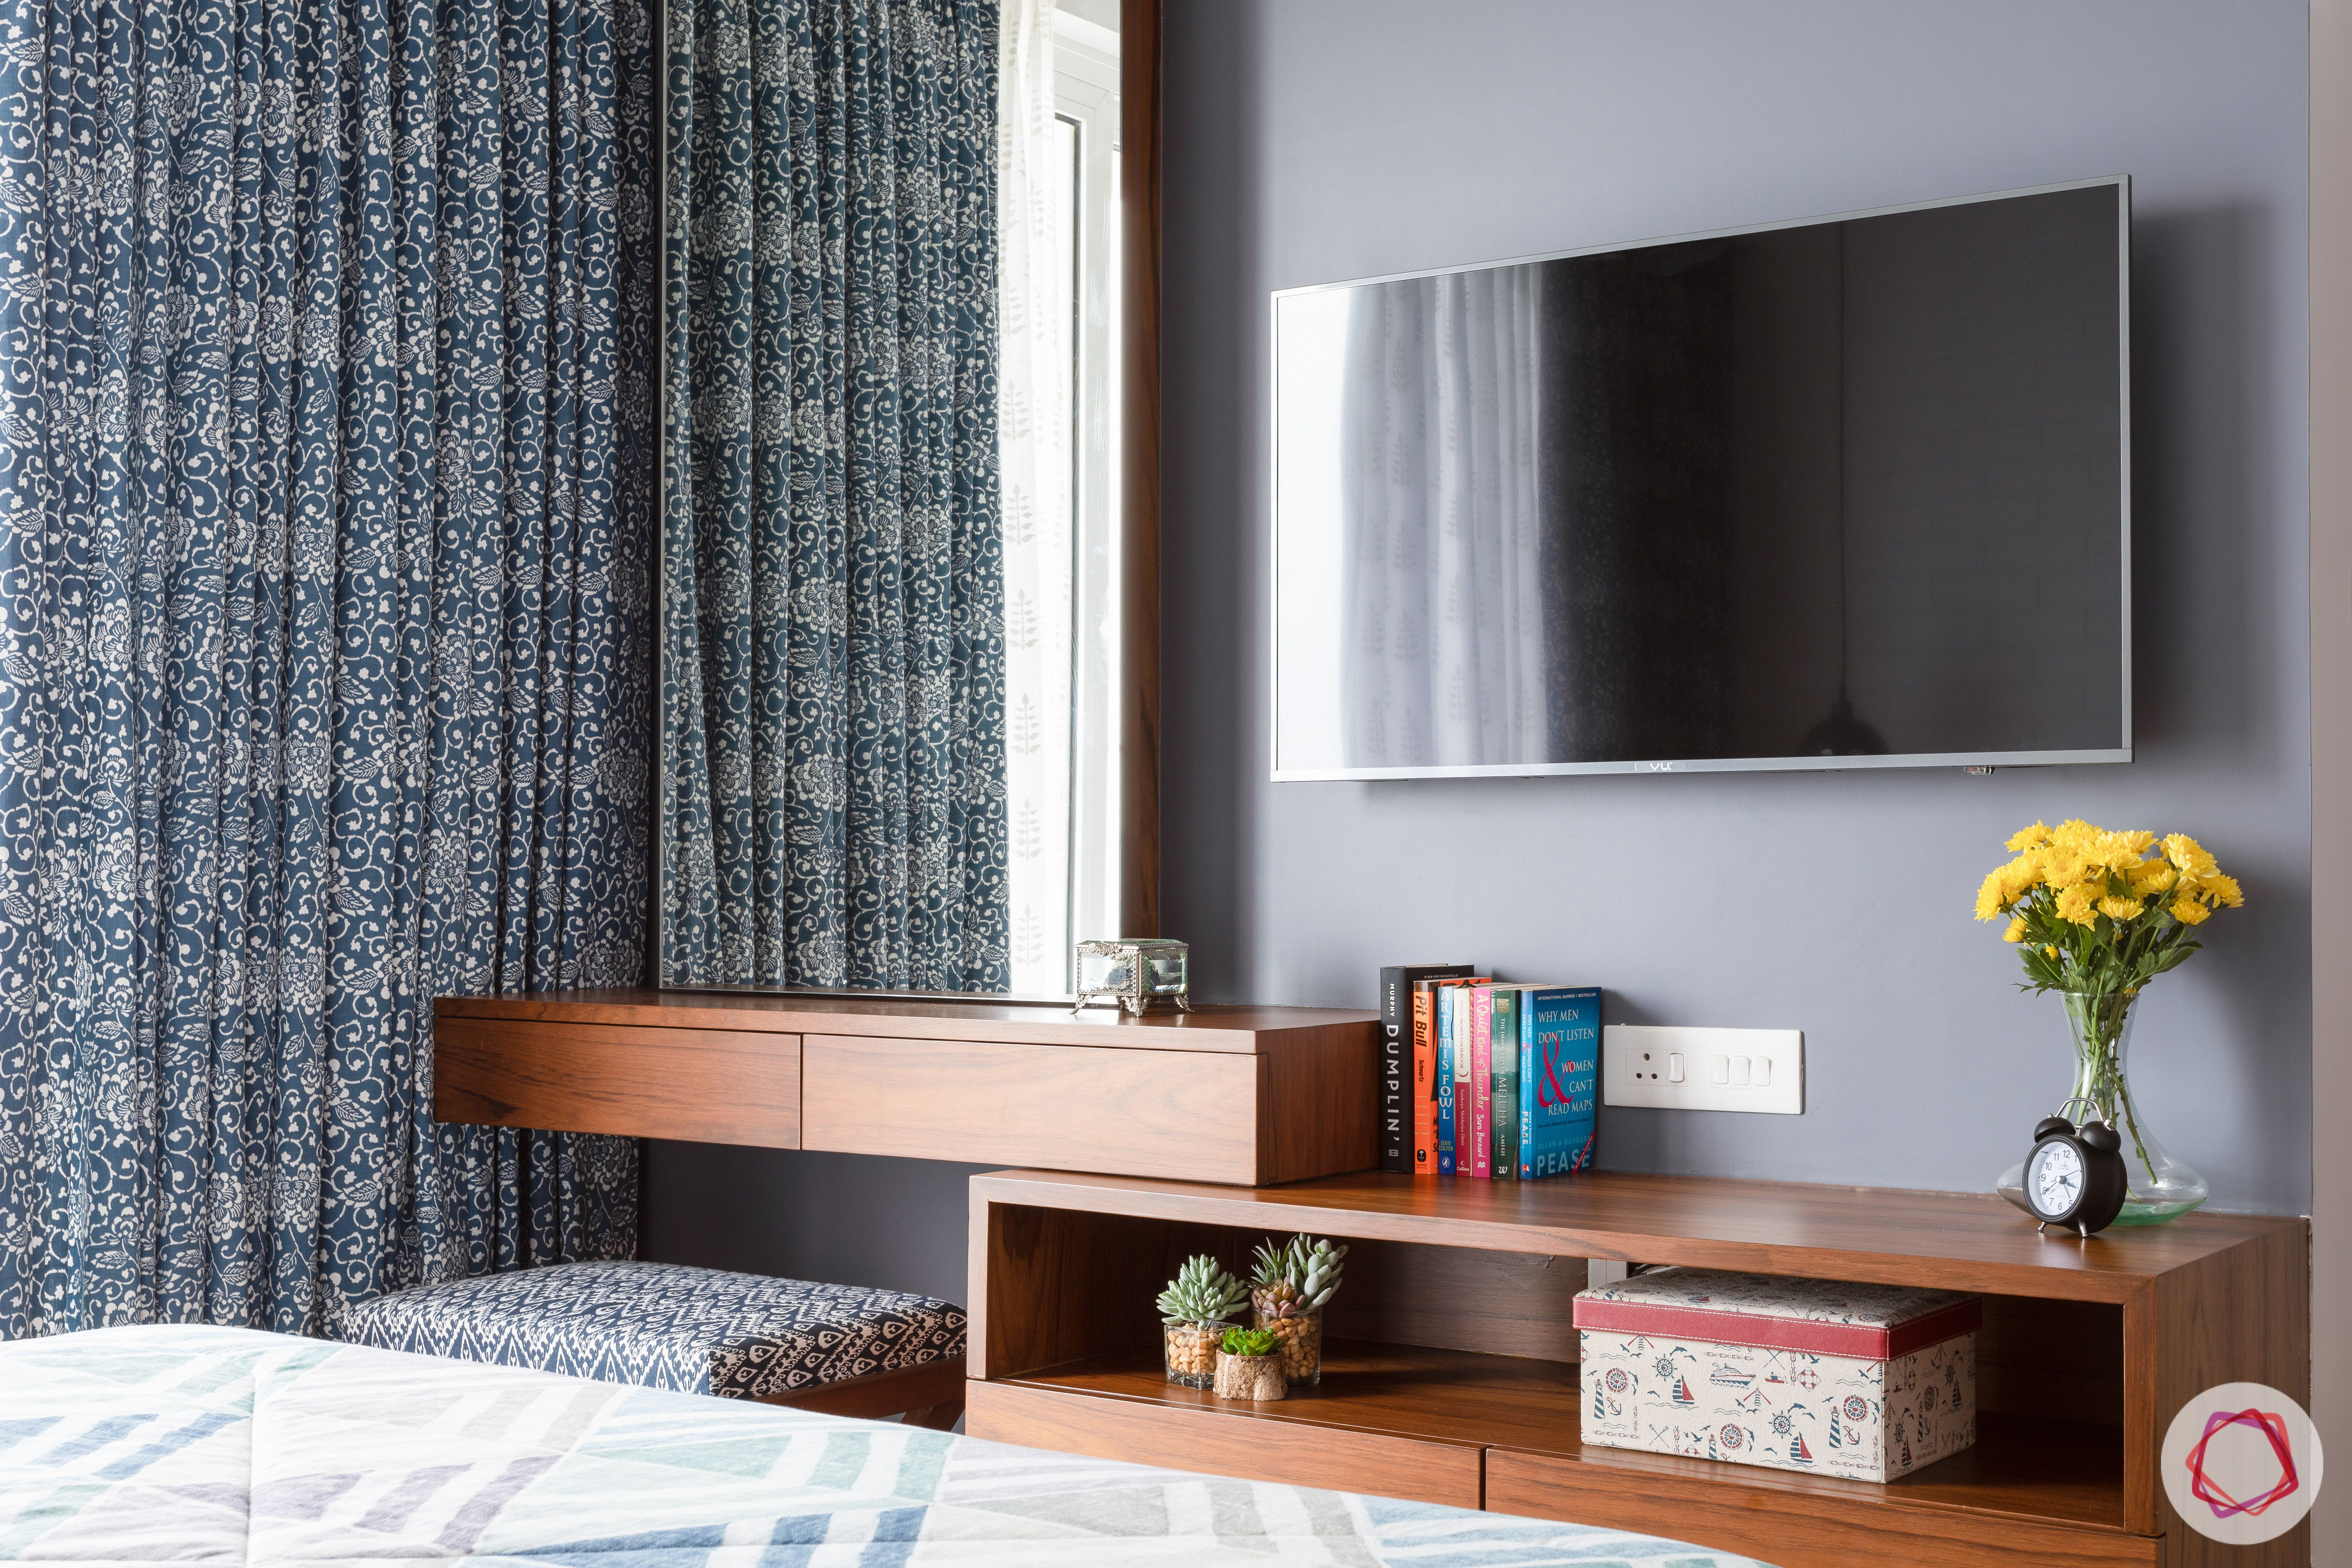 crescent bay-master bedroom-wooden flooring-tv unit-grey wall-dresser